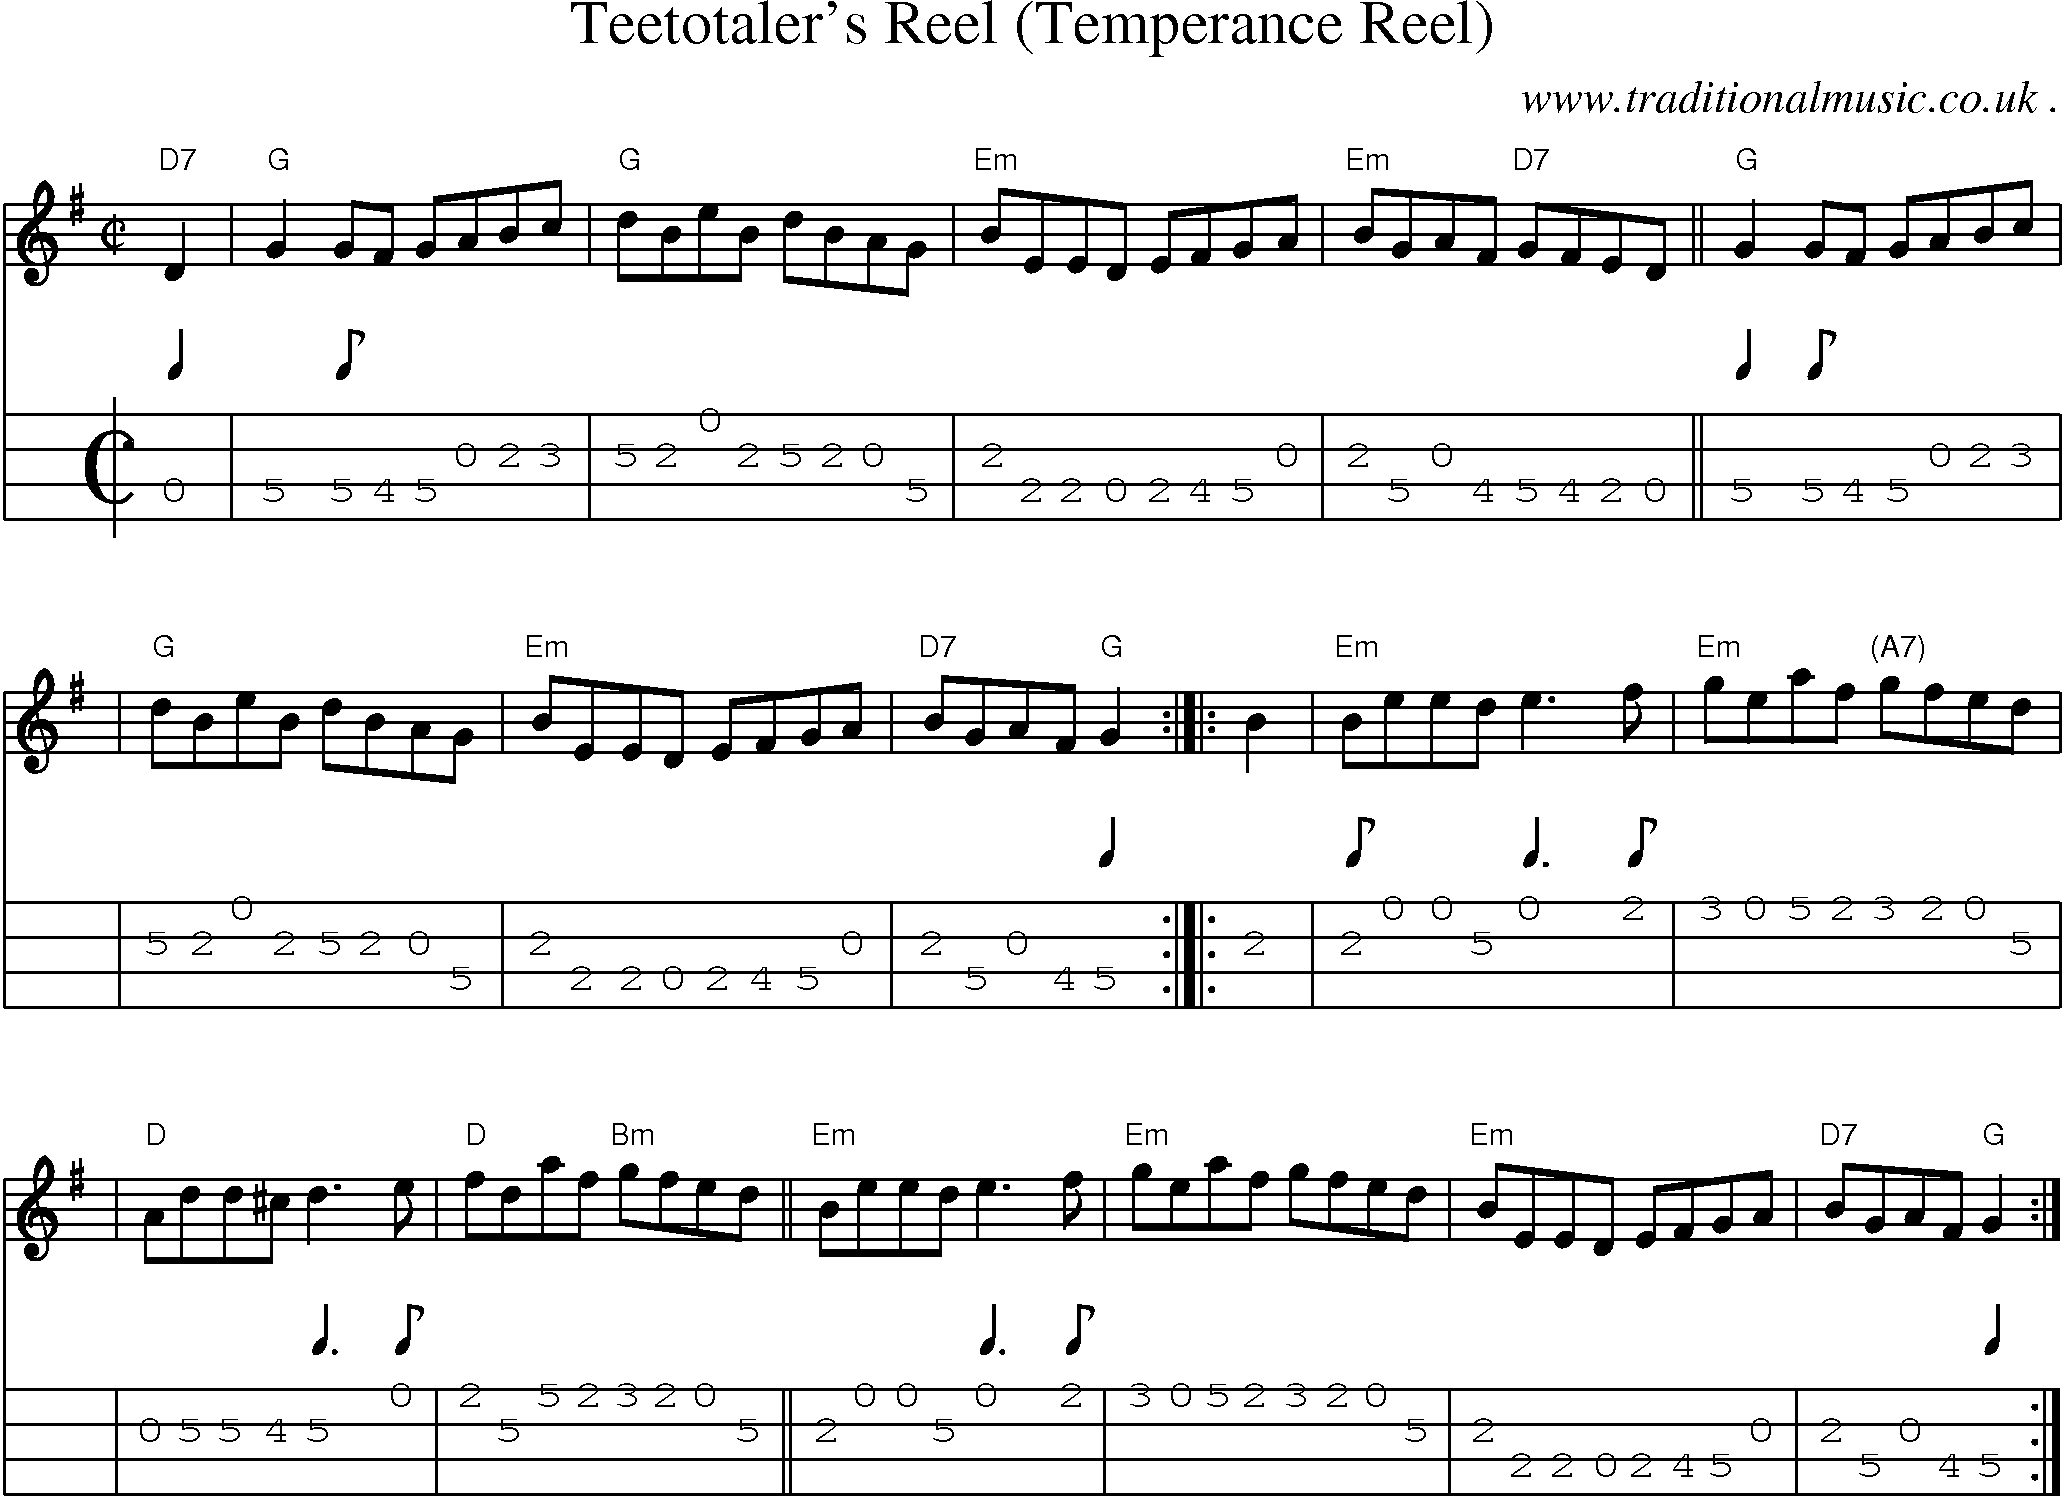 Sheet-music  score, Chords and Mandolin Tabs for Teetotalers Reel Temperance Reel